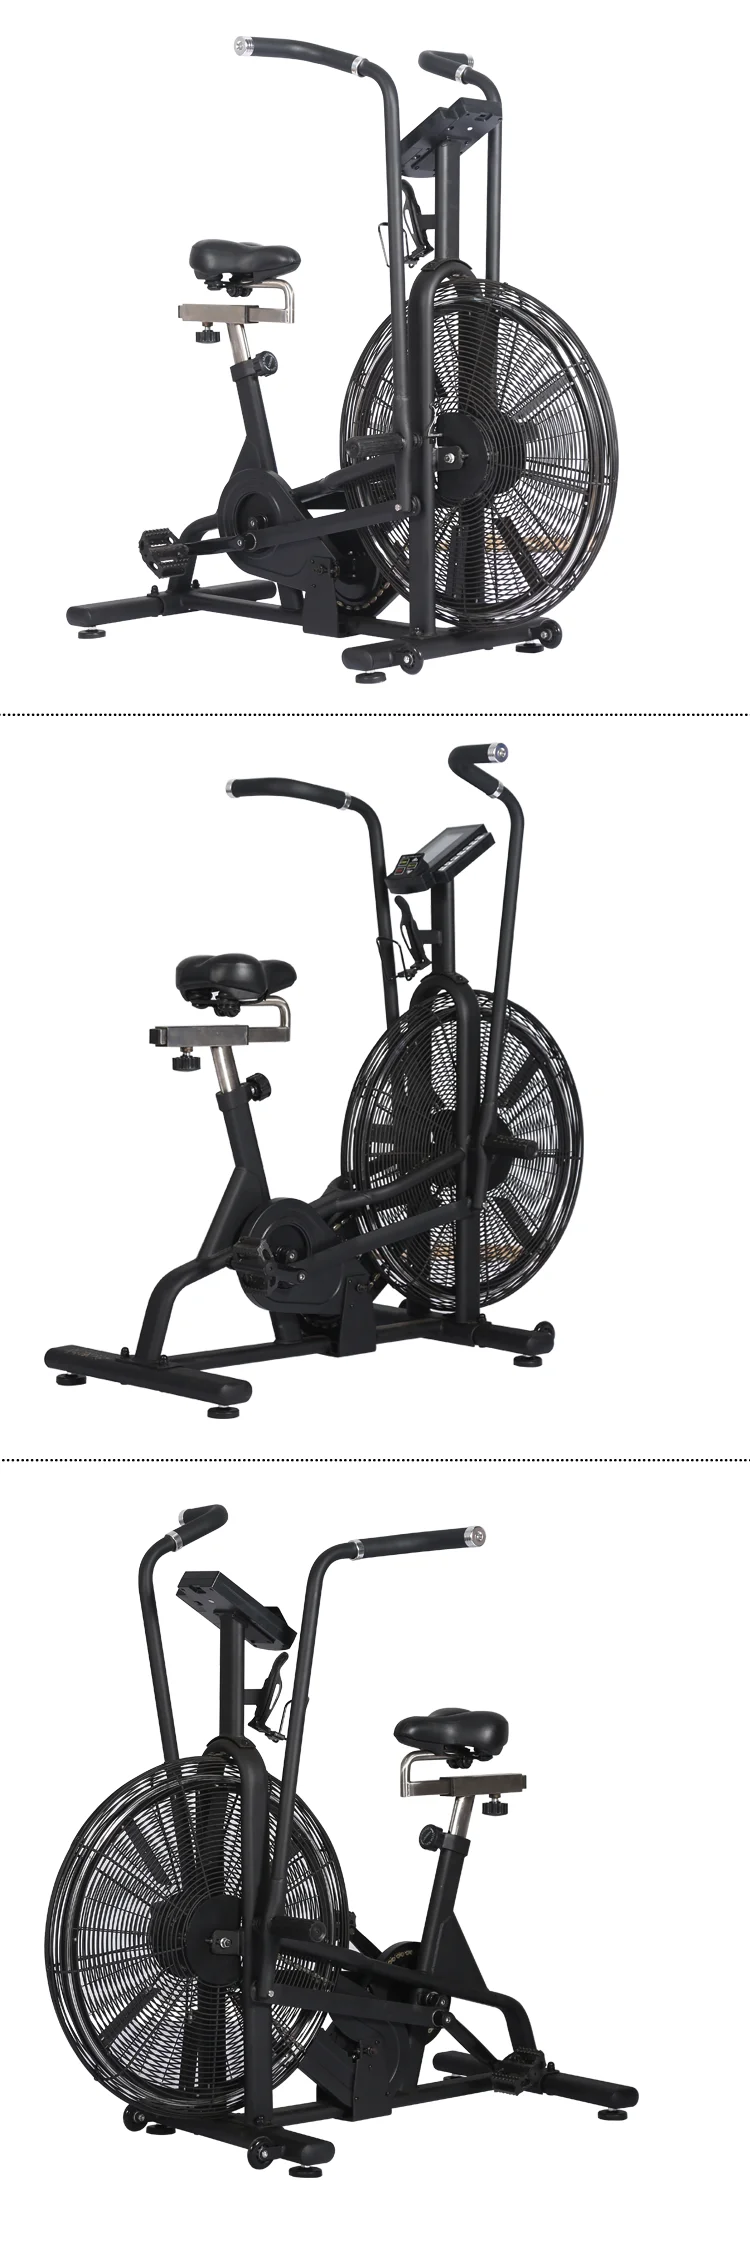 Commerical gym cardio air bike club fitness equipment assault bike fan bike